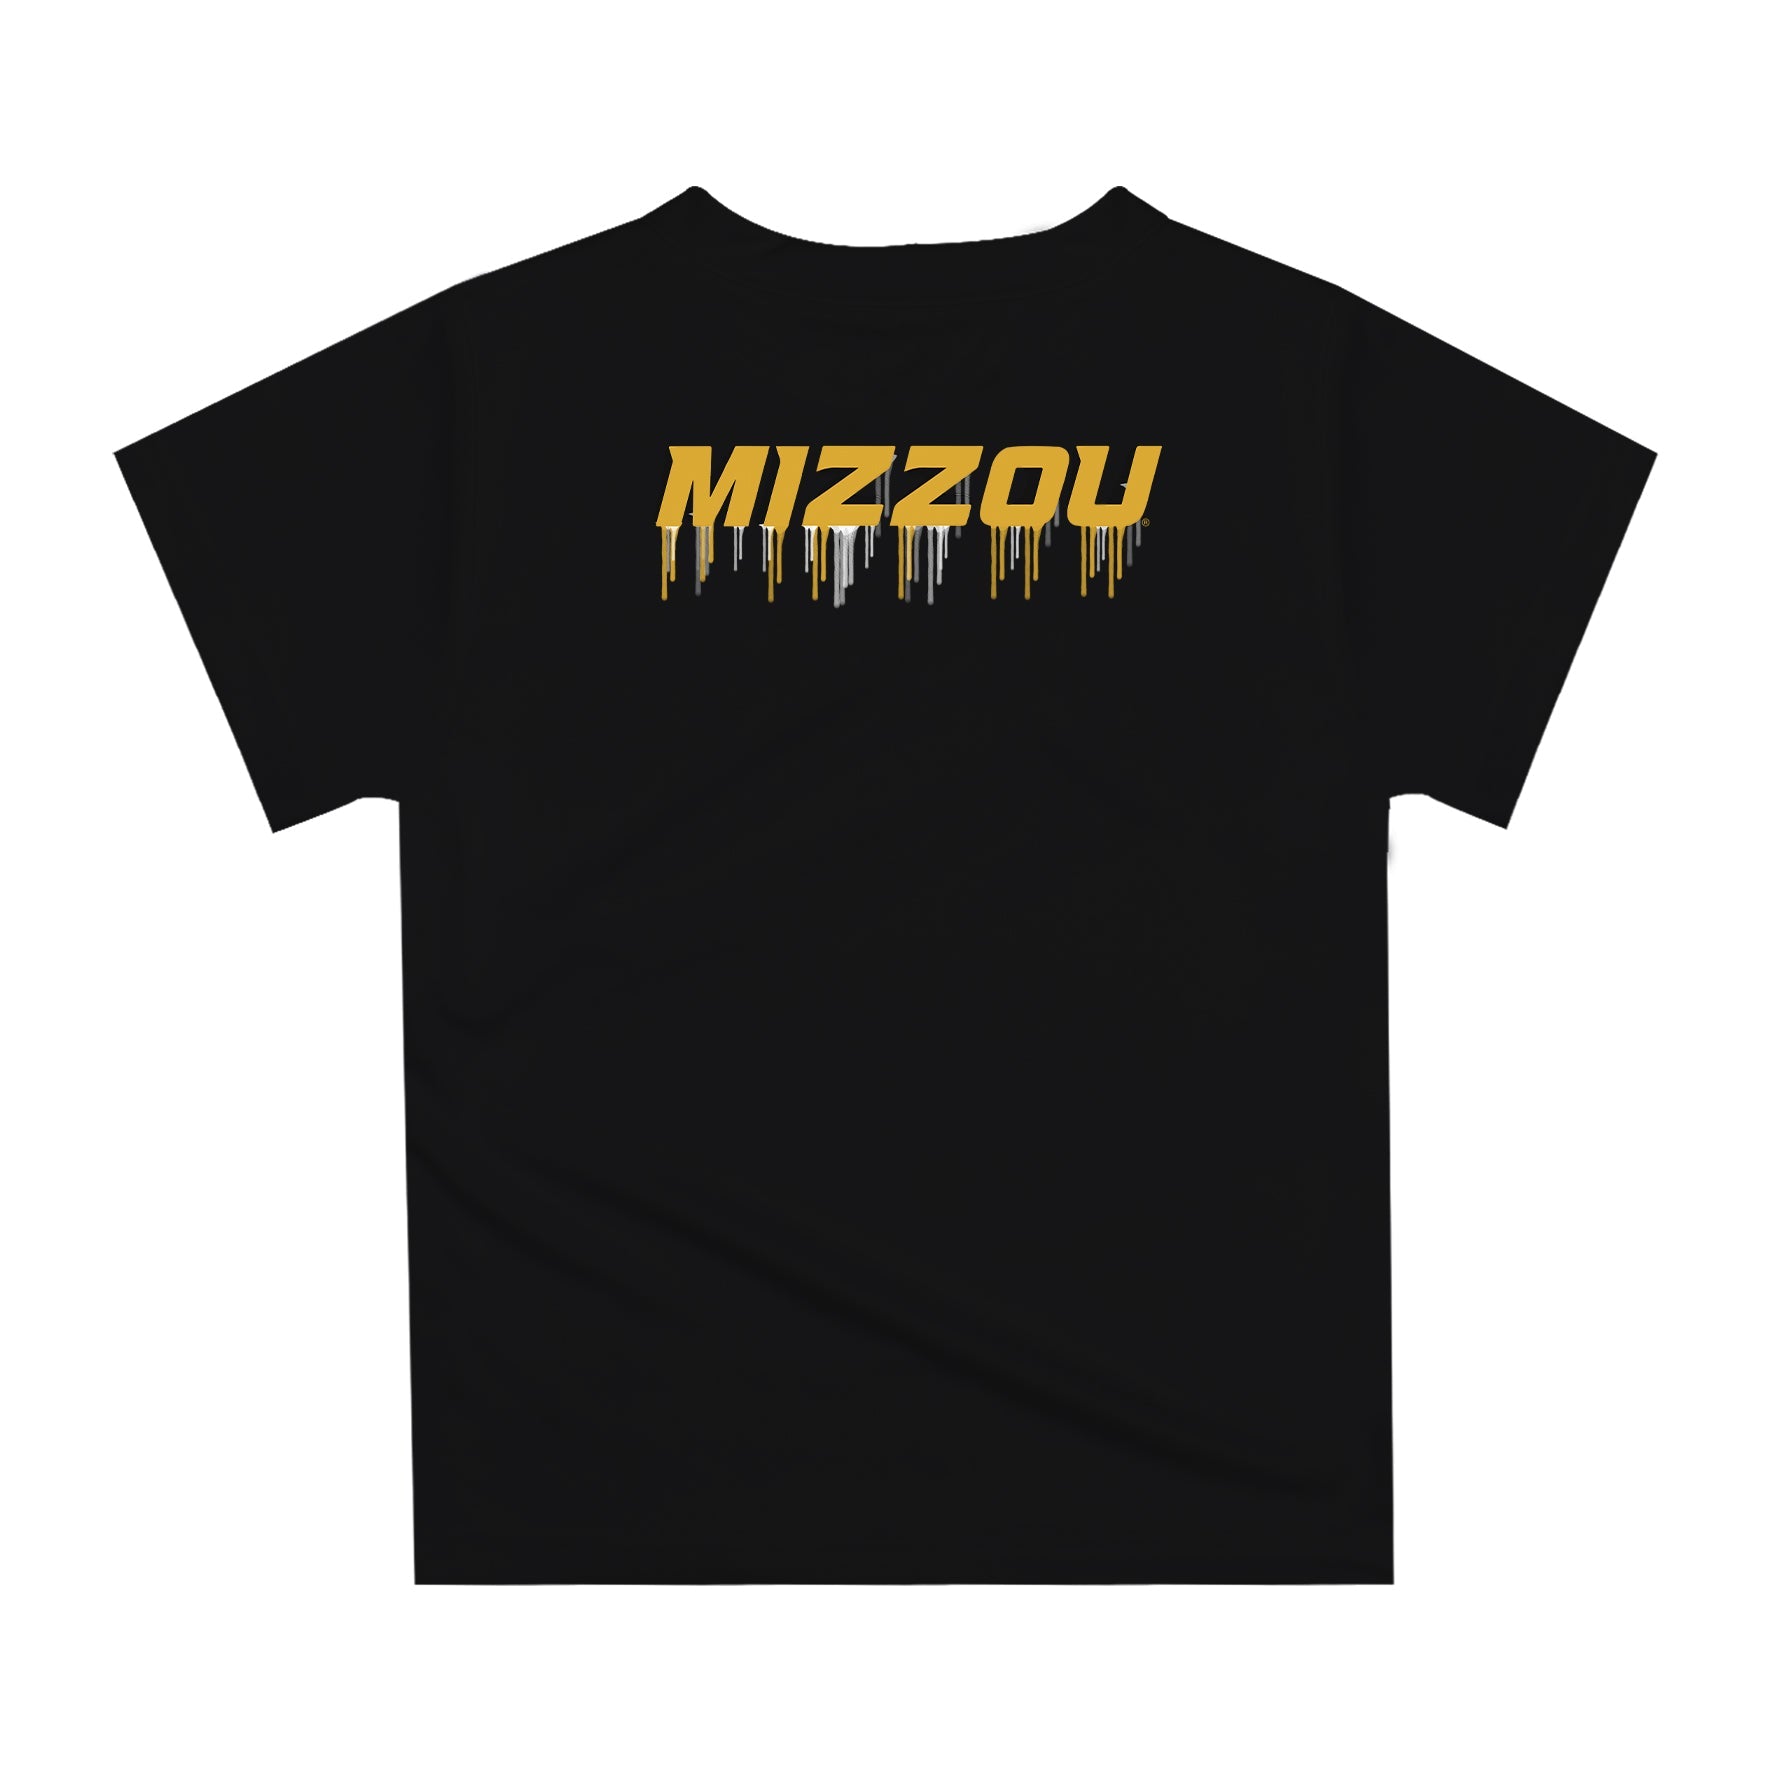 Missouri Tigers MU Original Dripping Football Helmet Black T-Shirt by Vive La Fete